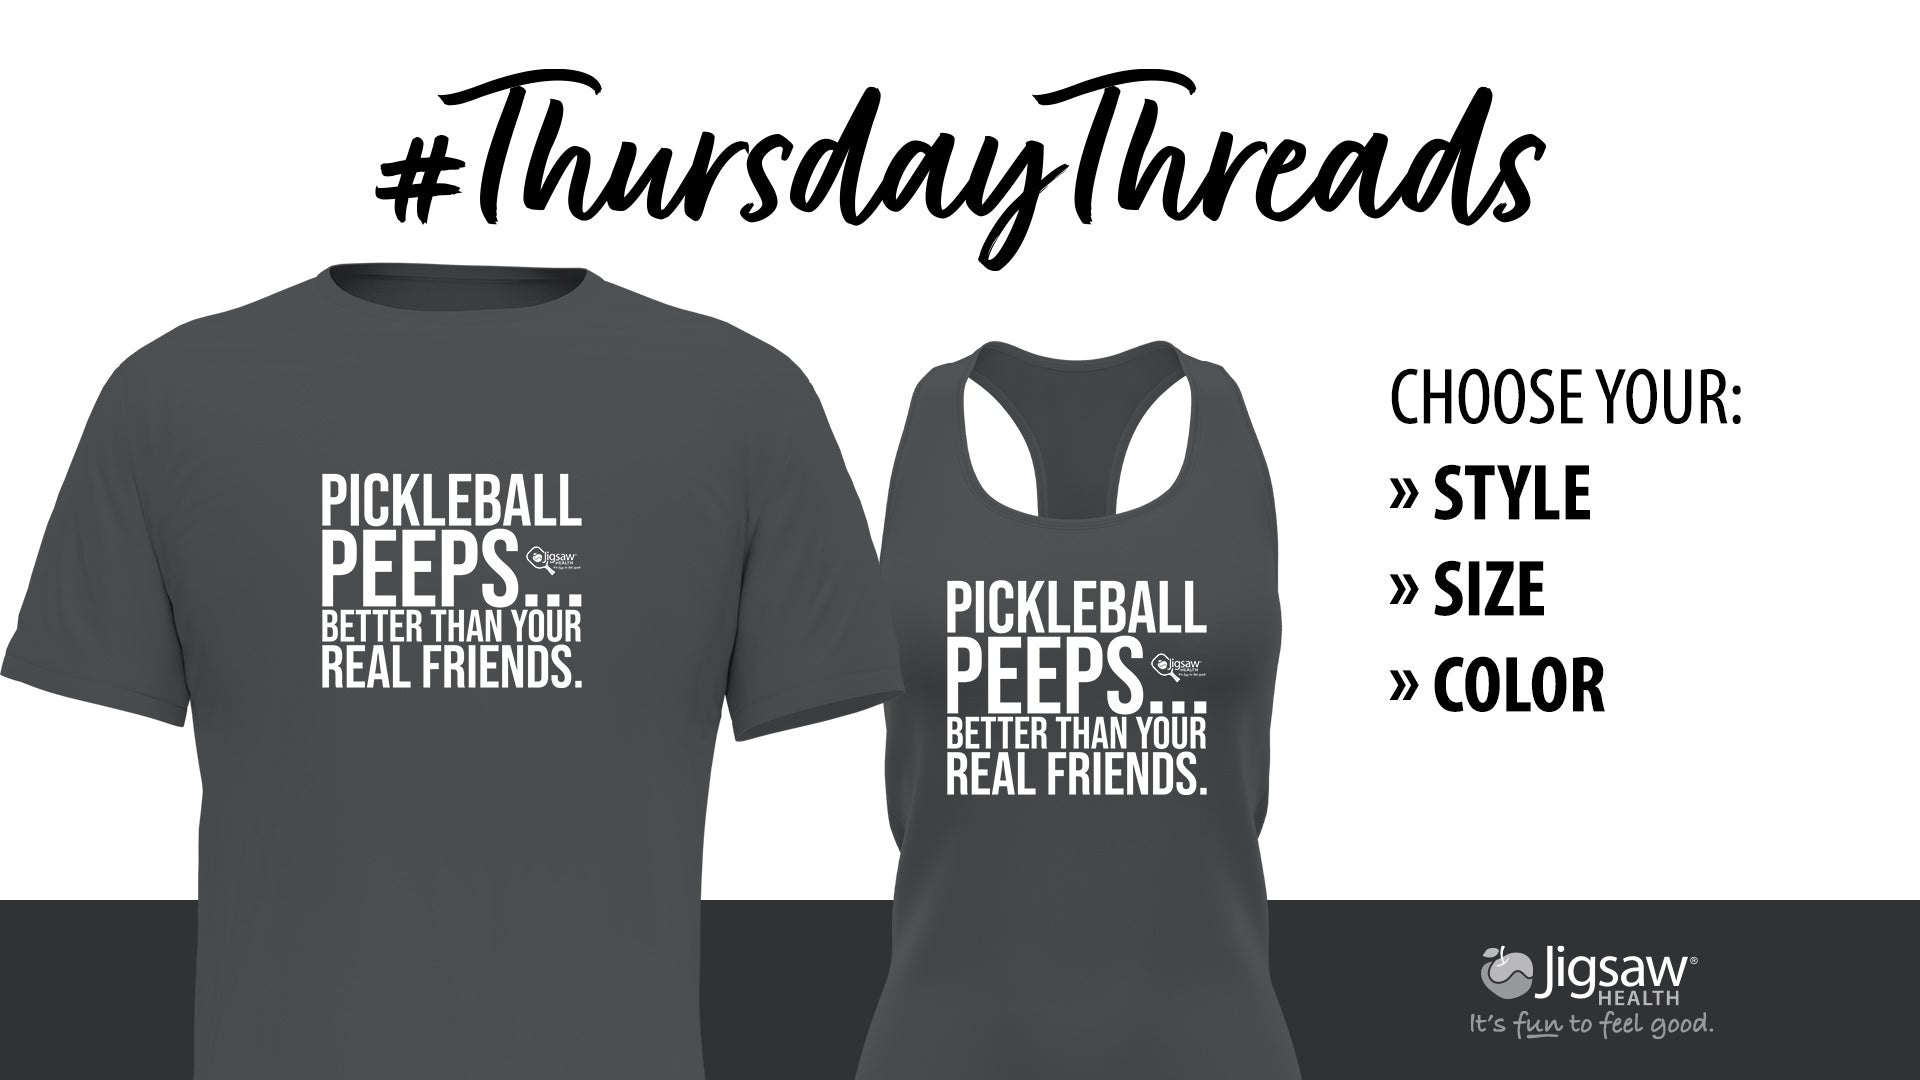 Pickleball Peeps... Better than your real friends. #ThursdayThreads